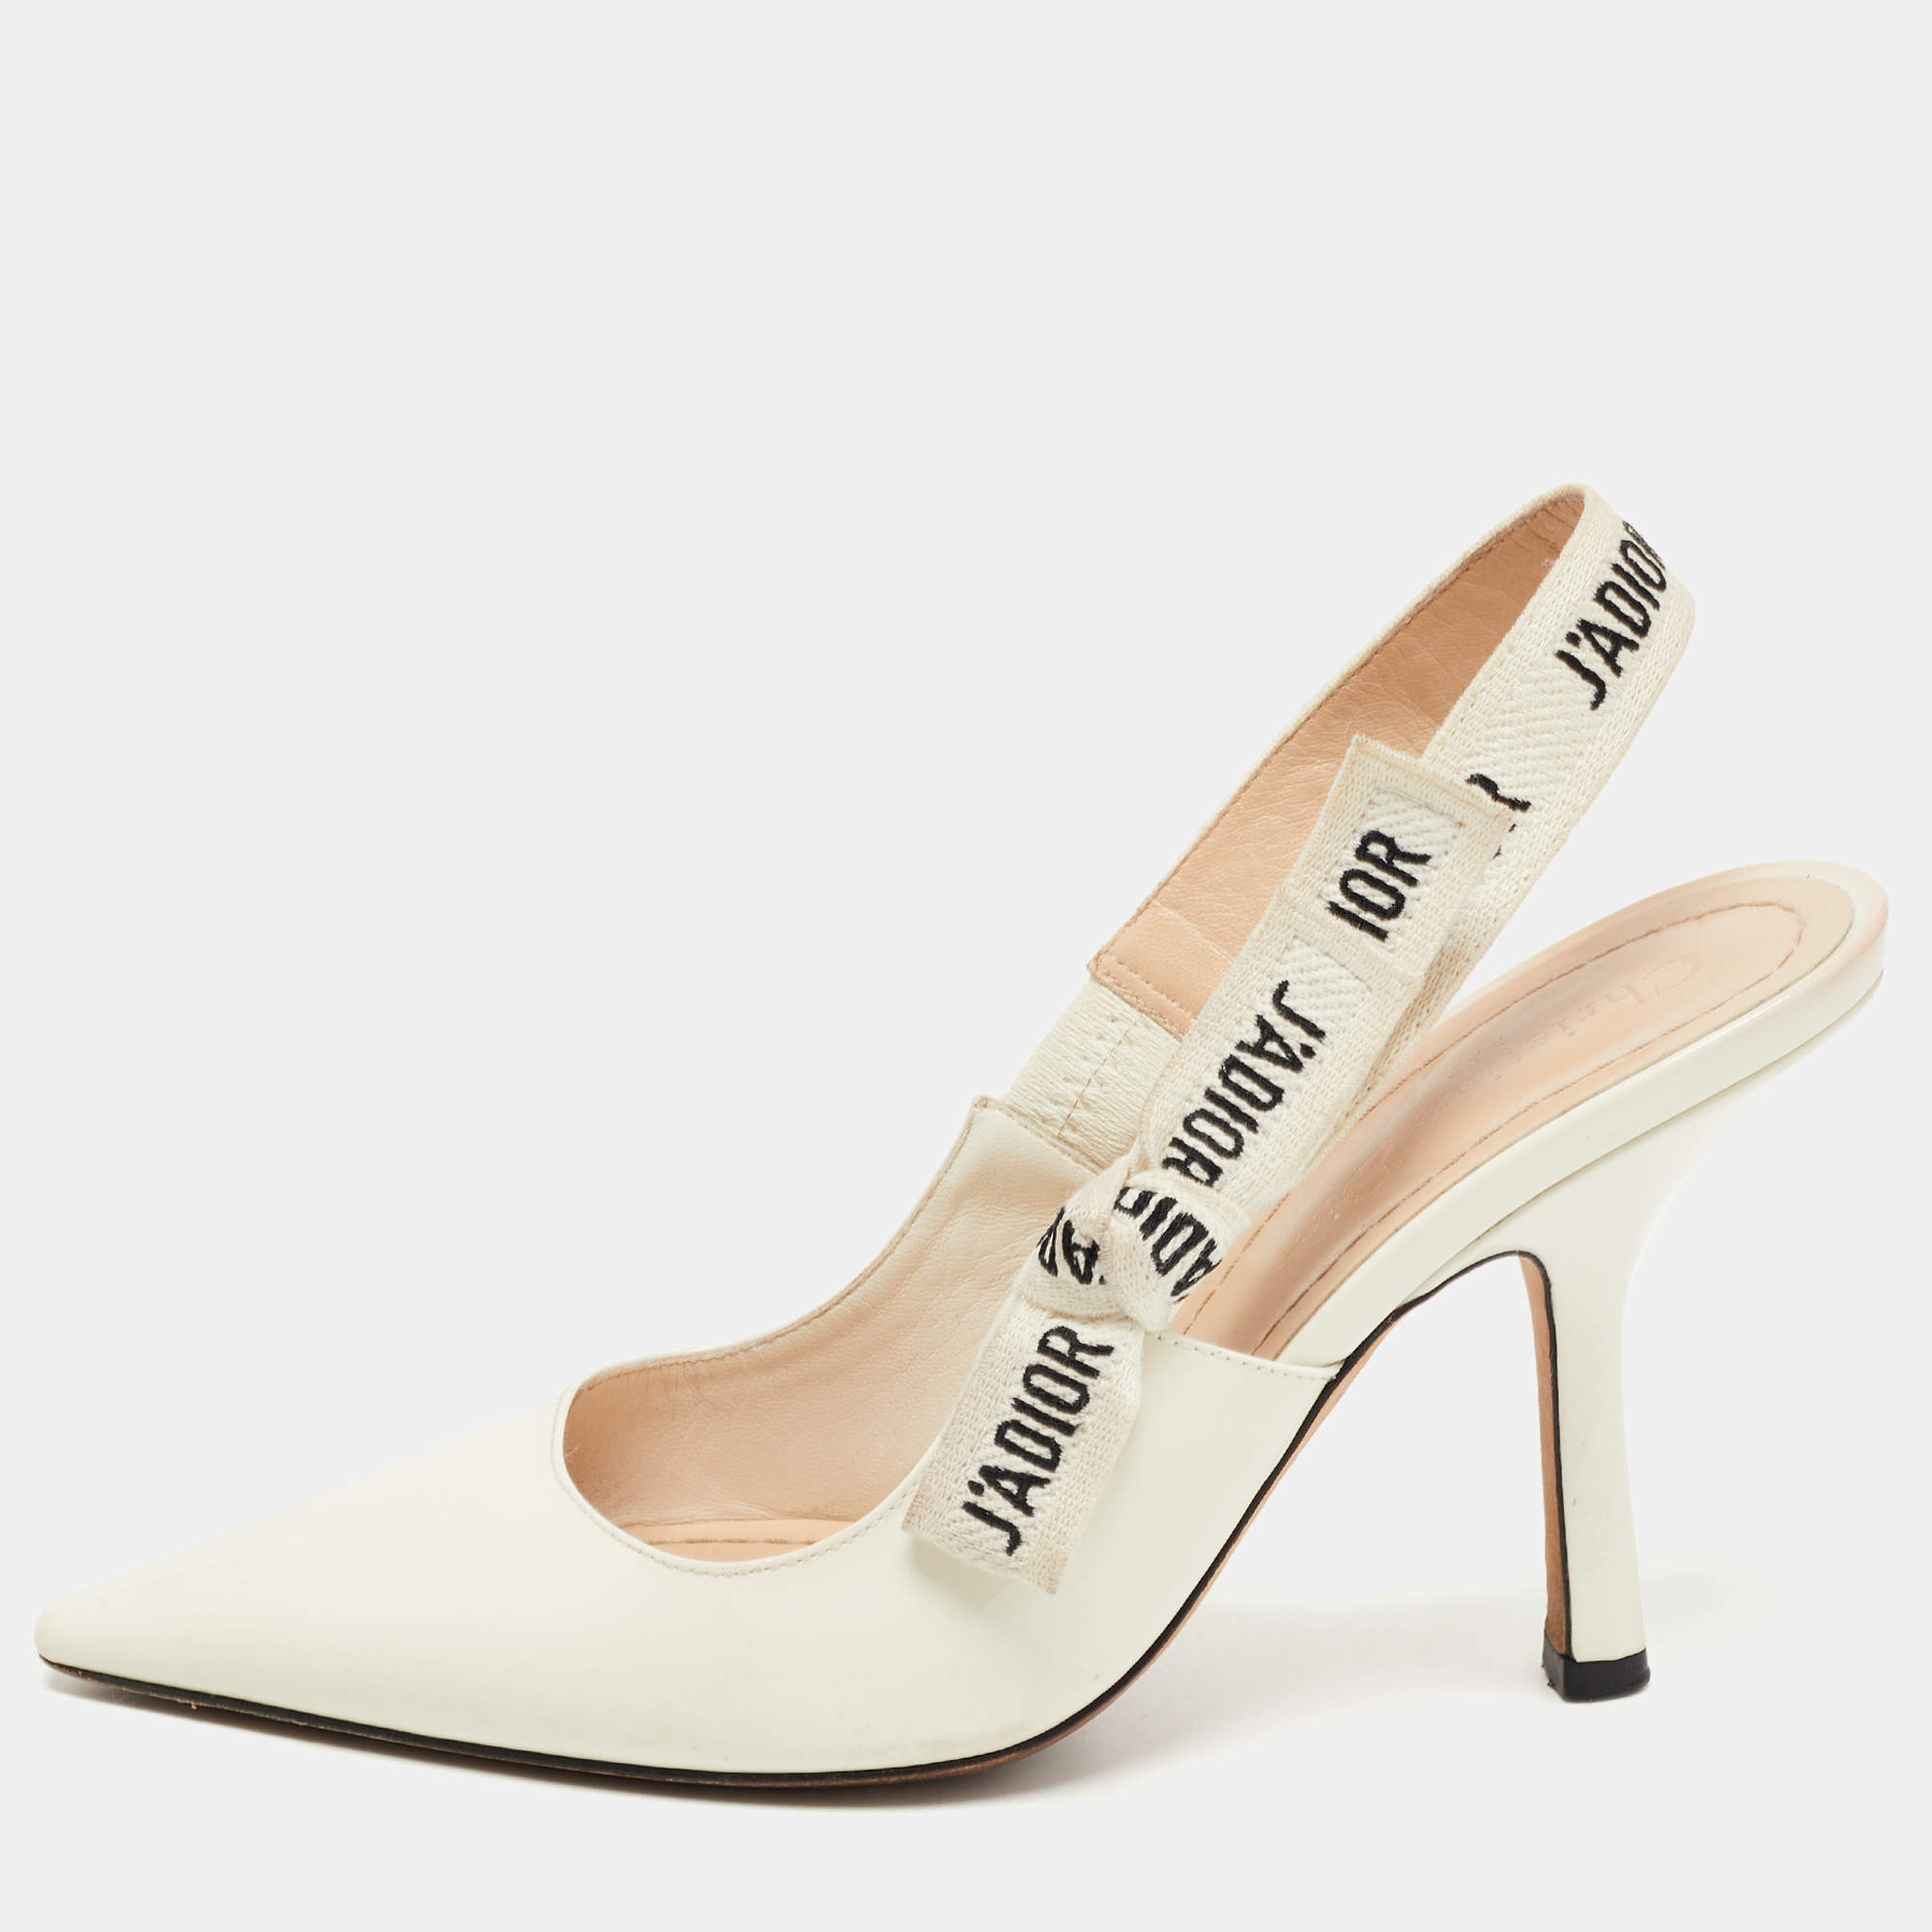 Dior J039Adior Slingback Patent Leather Heel Pumps Ivory White  Women039s 395  95  eBay